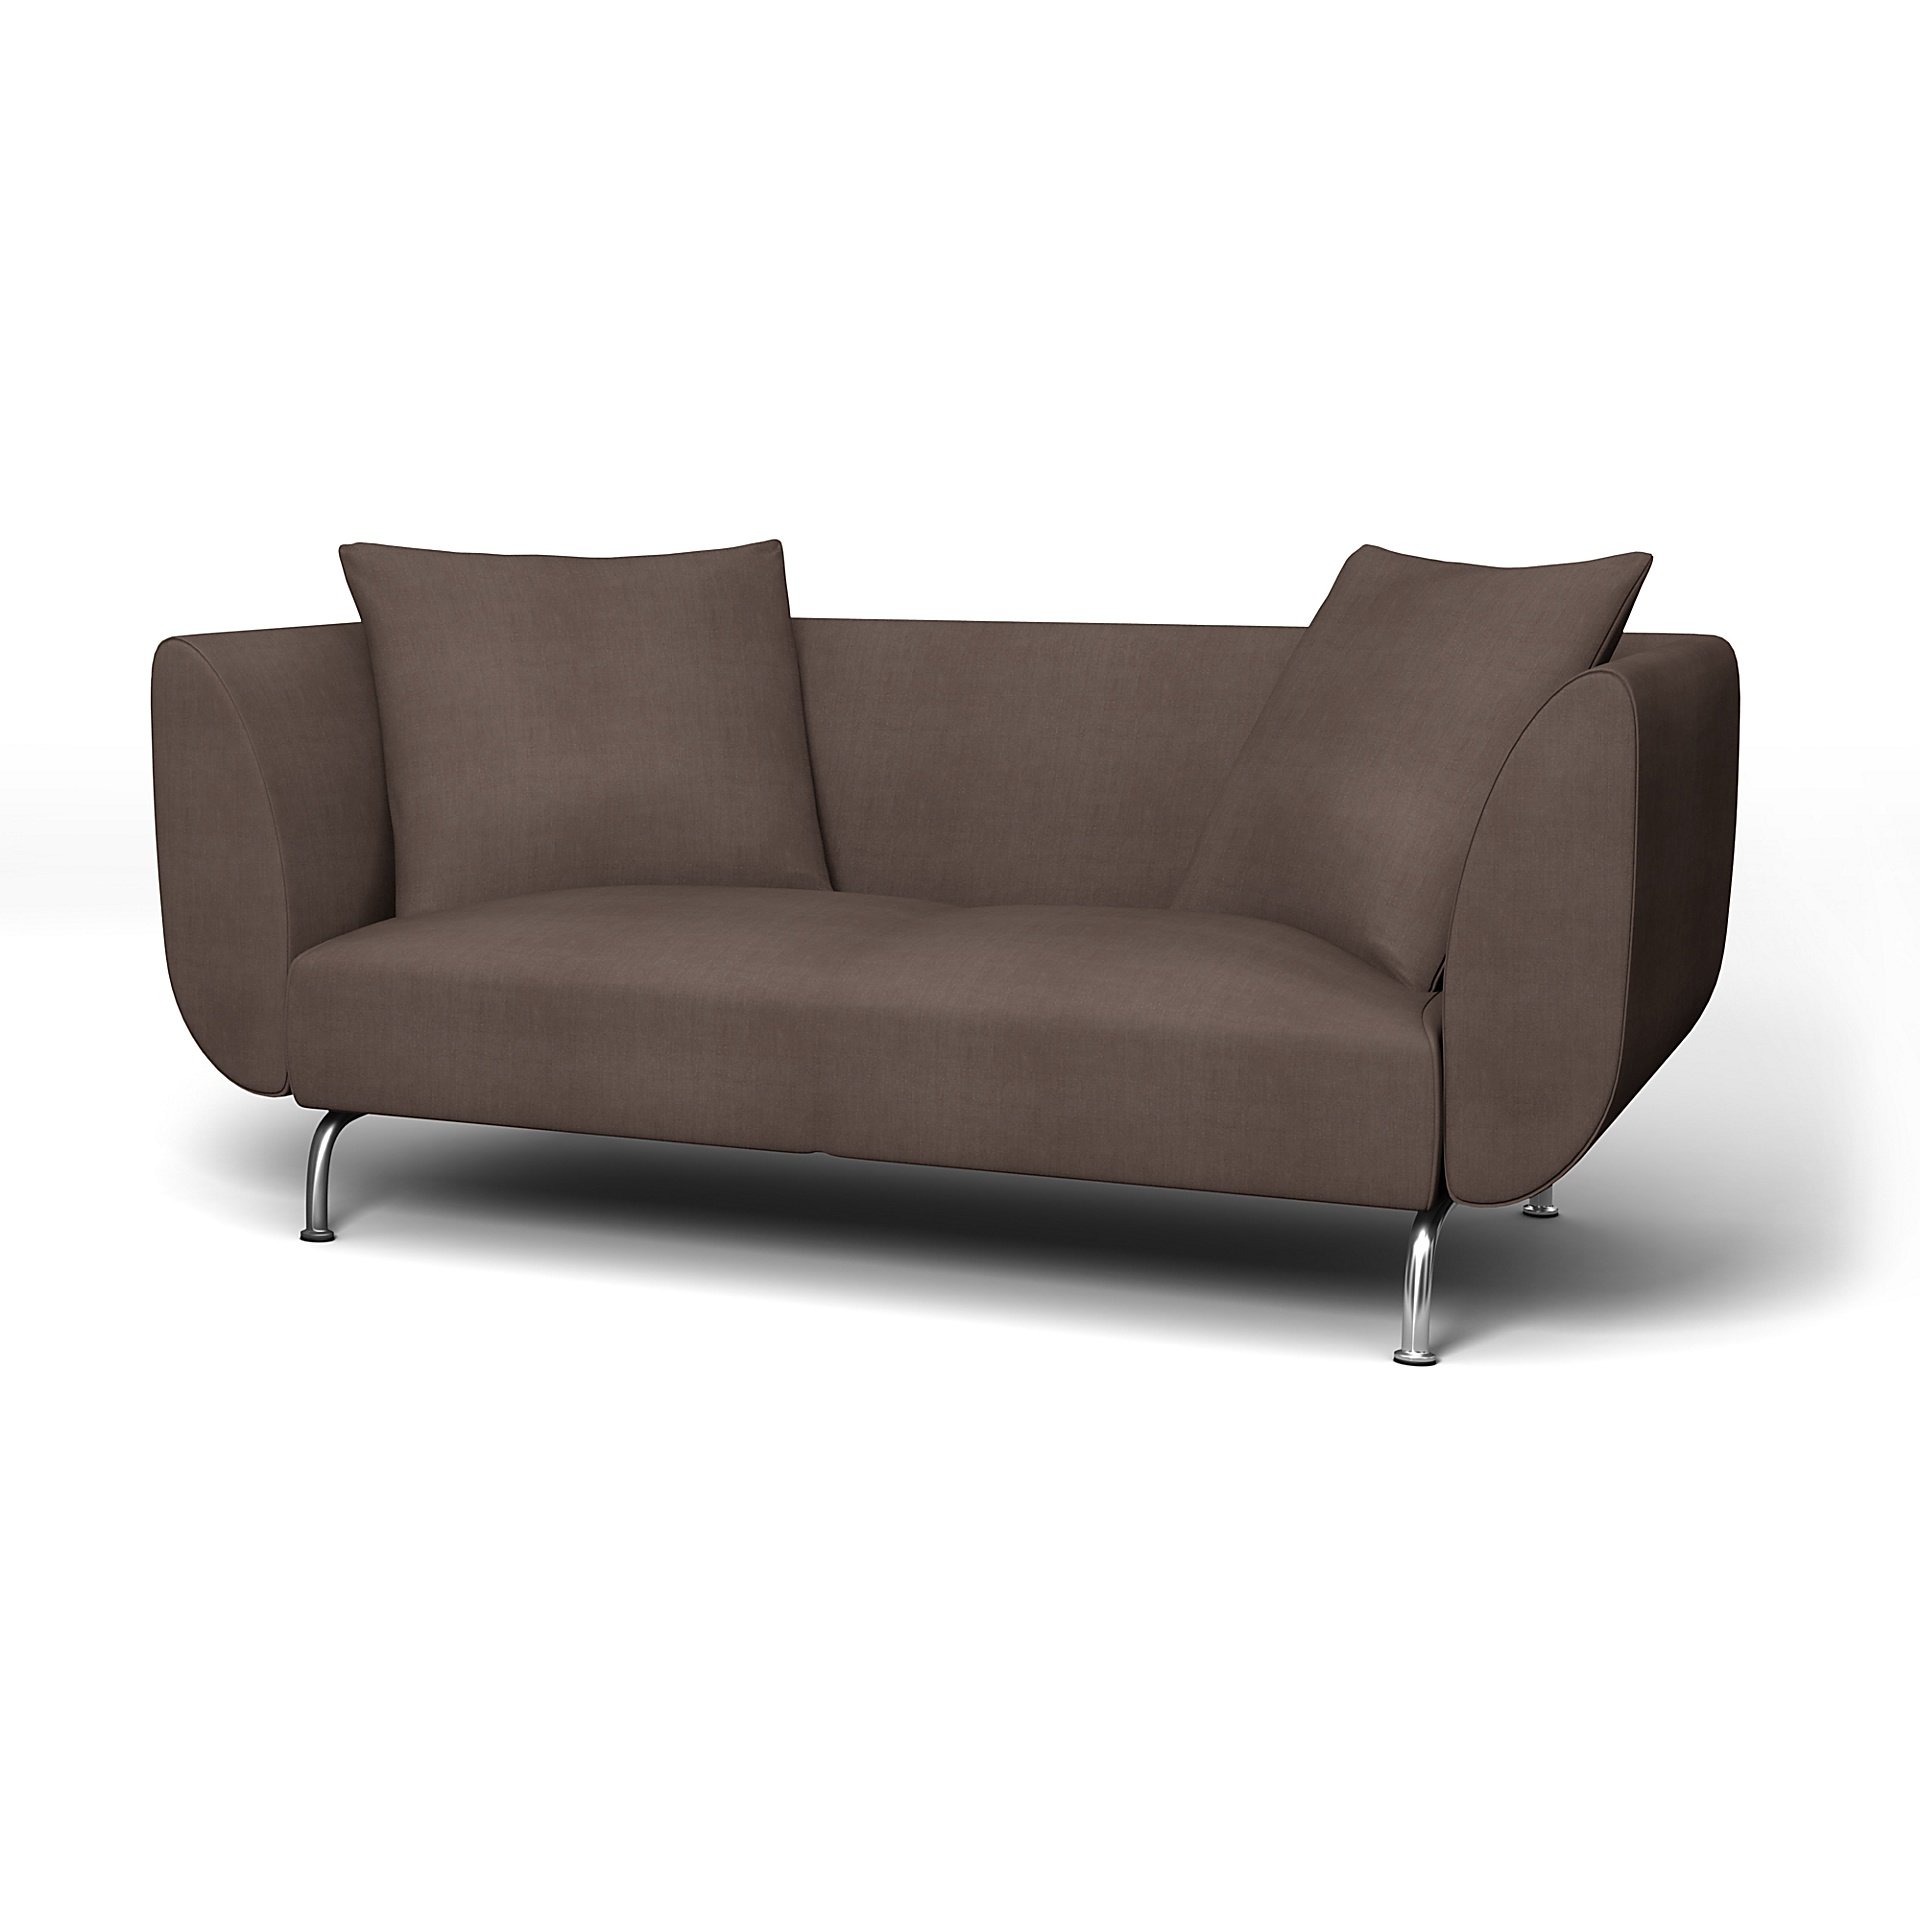 IKEA - Stromstad 2 Seater Sofa Cover, Cocoa, Linen - Bemz